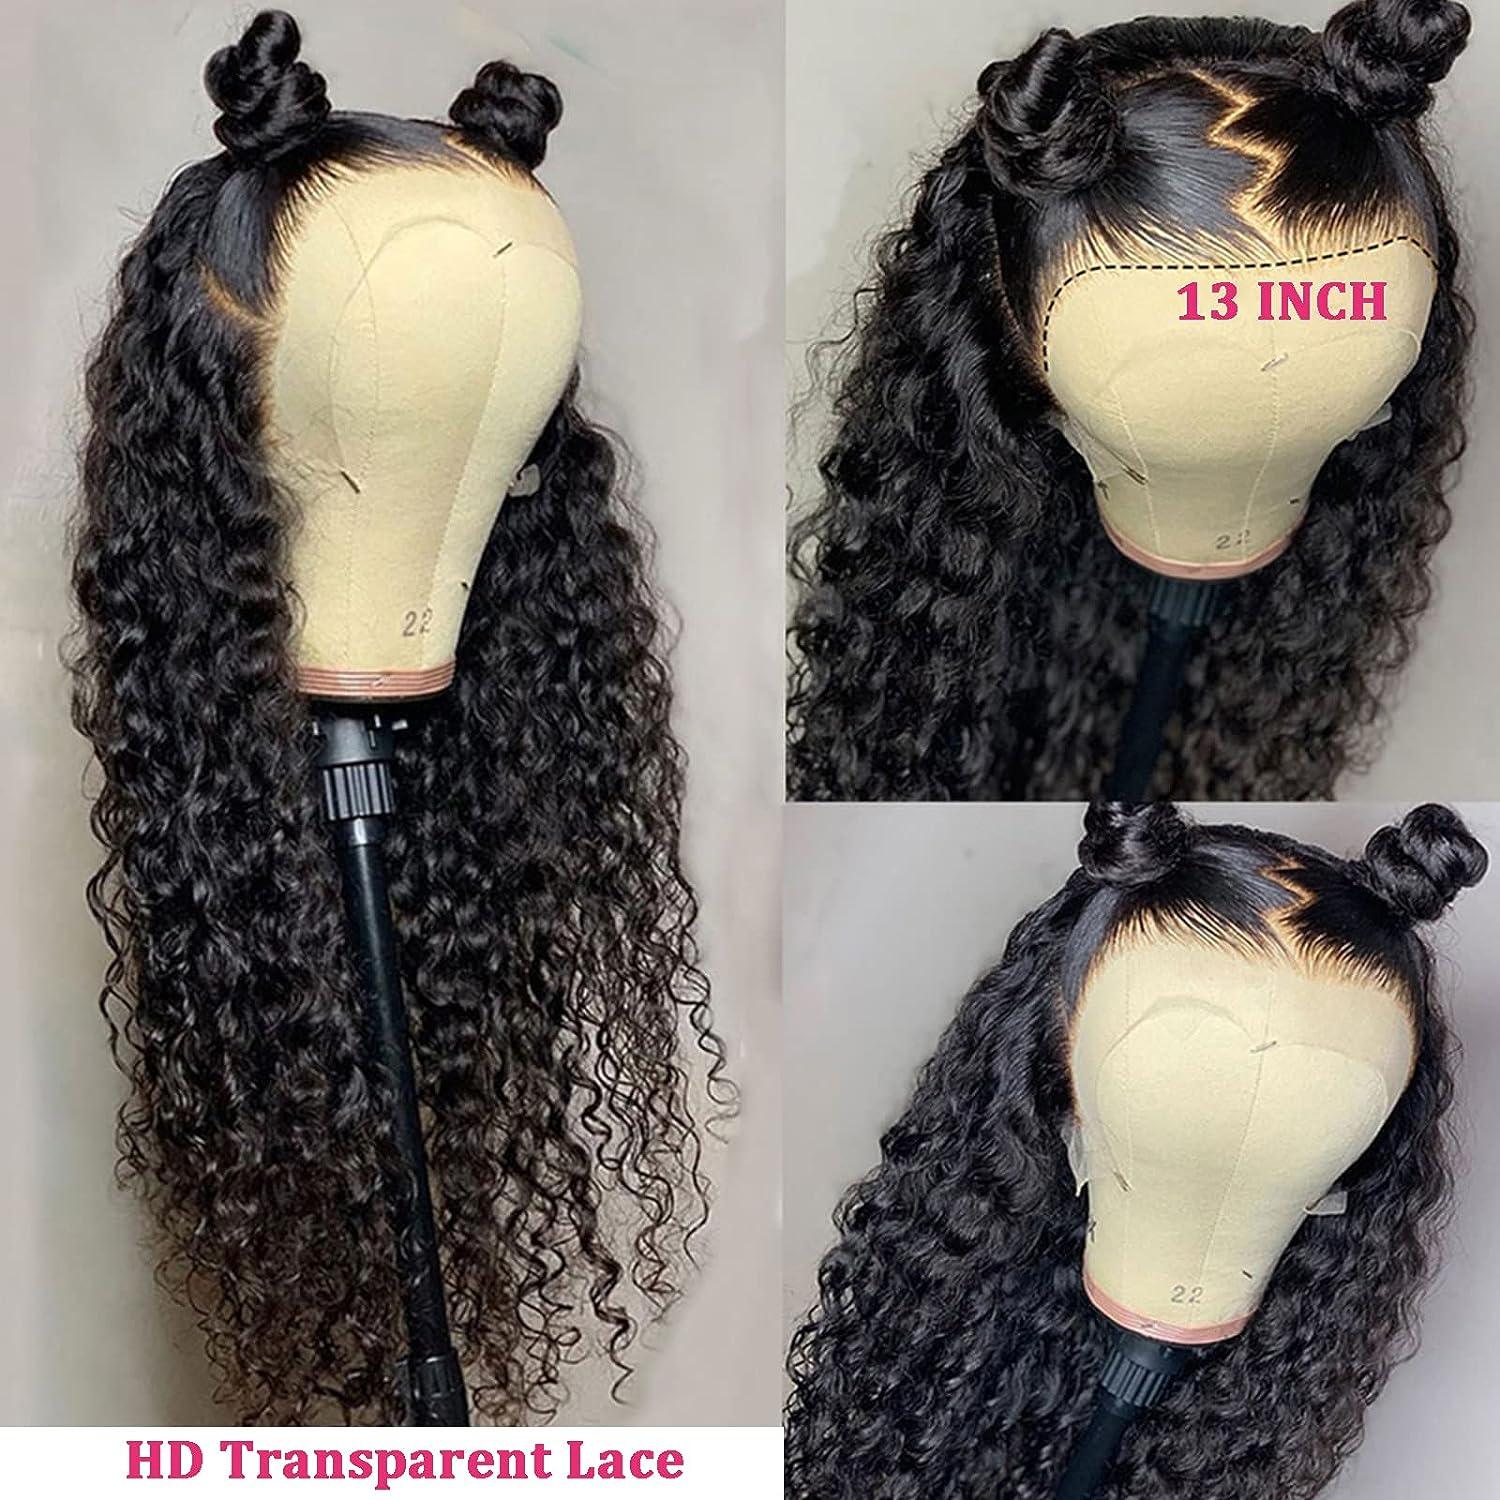 BLACROSS Short Bob Wigs Human Hair Wigs with Bangs for Black Women